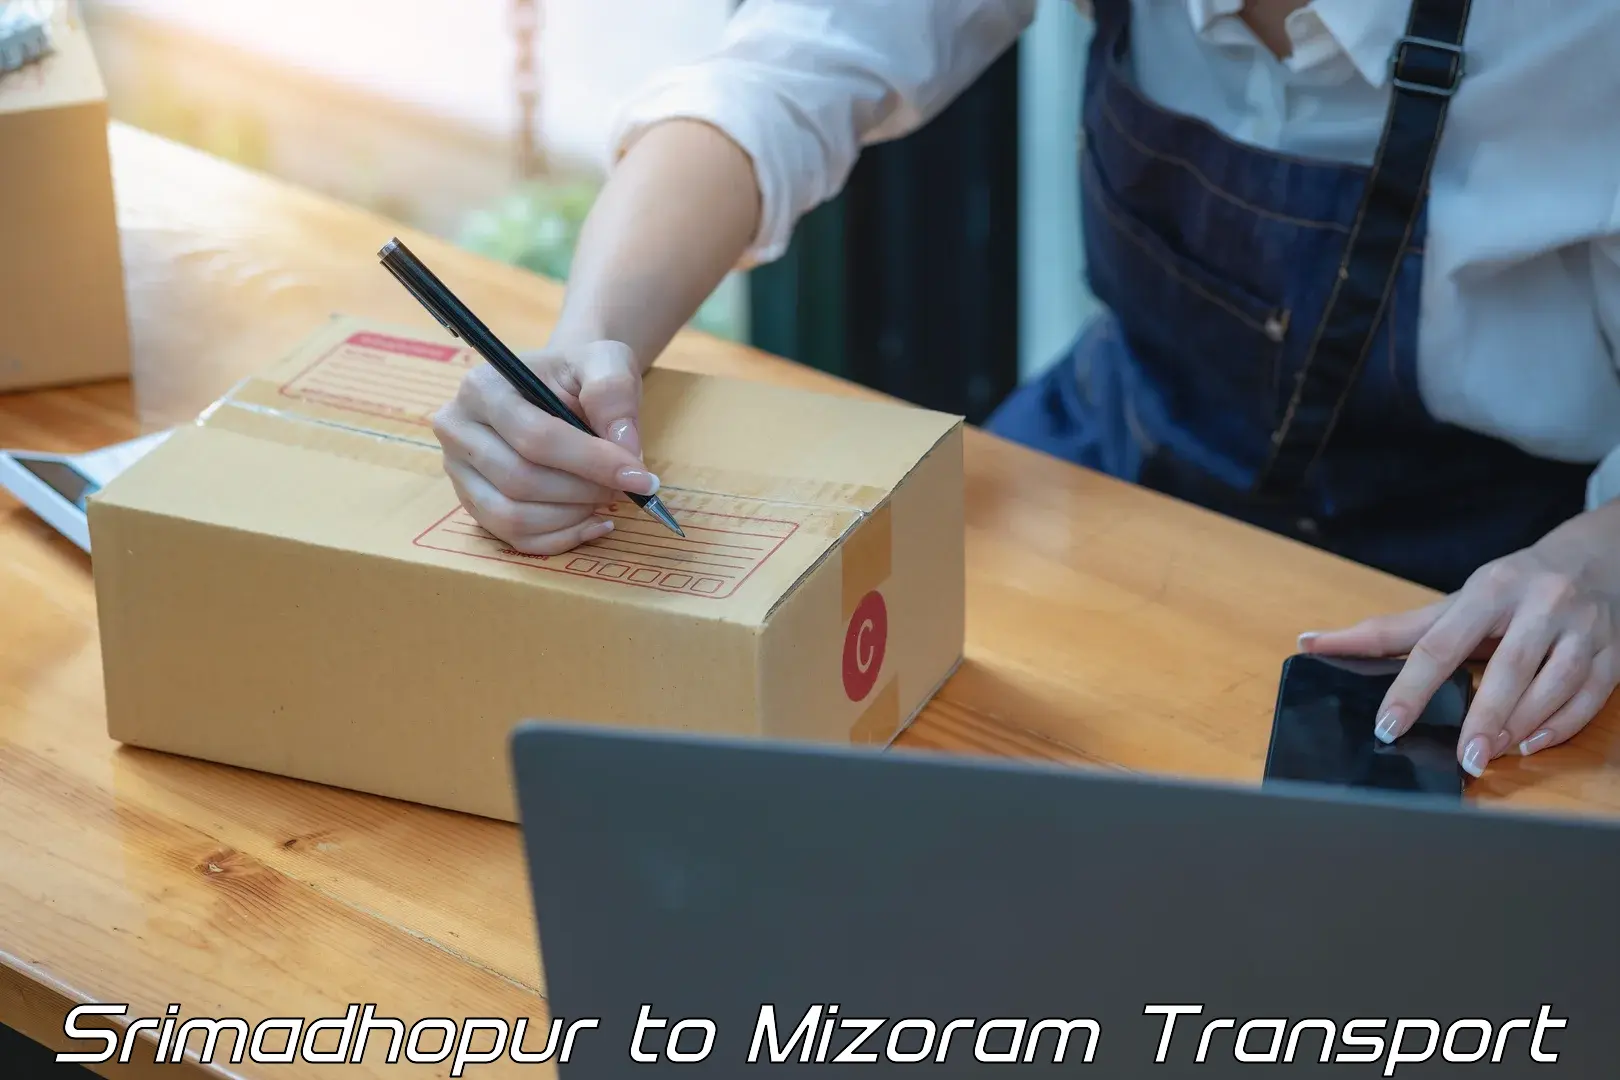 International cargo transportation services Srimadhopur to Mizoram